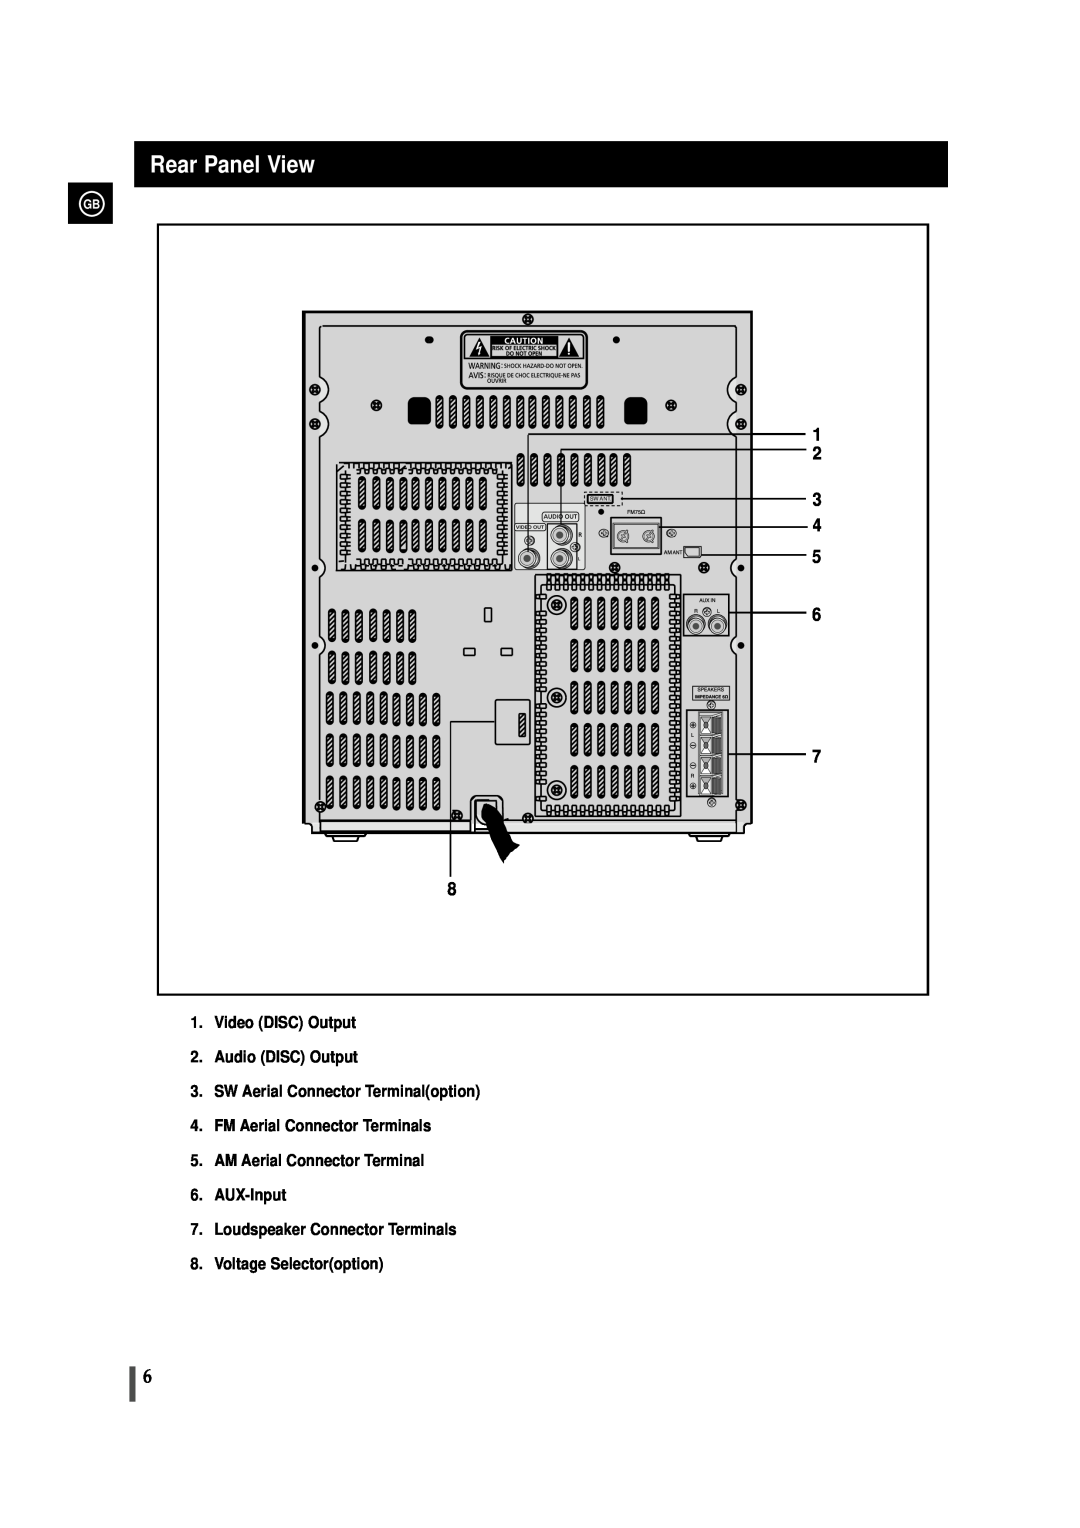 Samsung MAX-VL45, AH68-00935B Rear Panel View, Video DISC Output 2.Audio DISC Output, SW Aerial Connector Terminaloption 